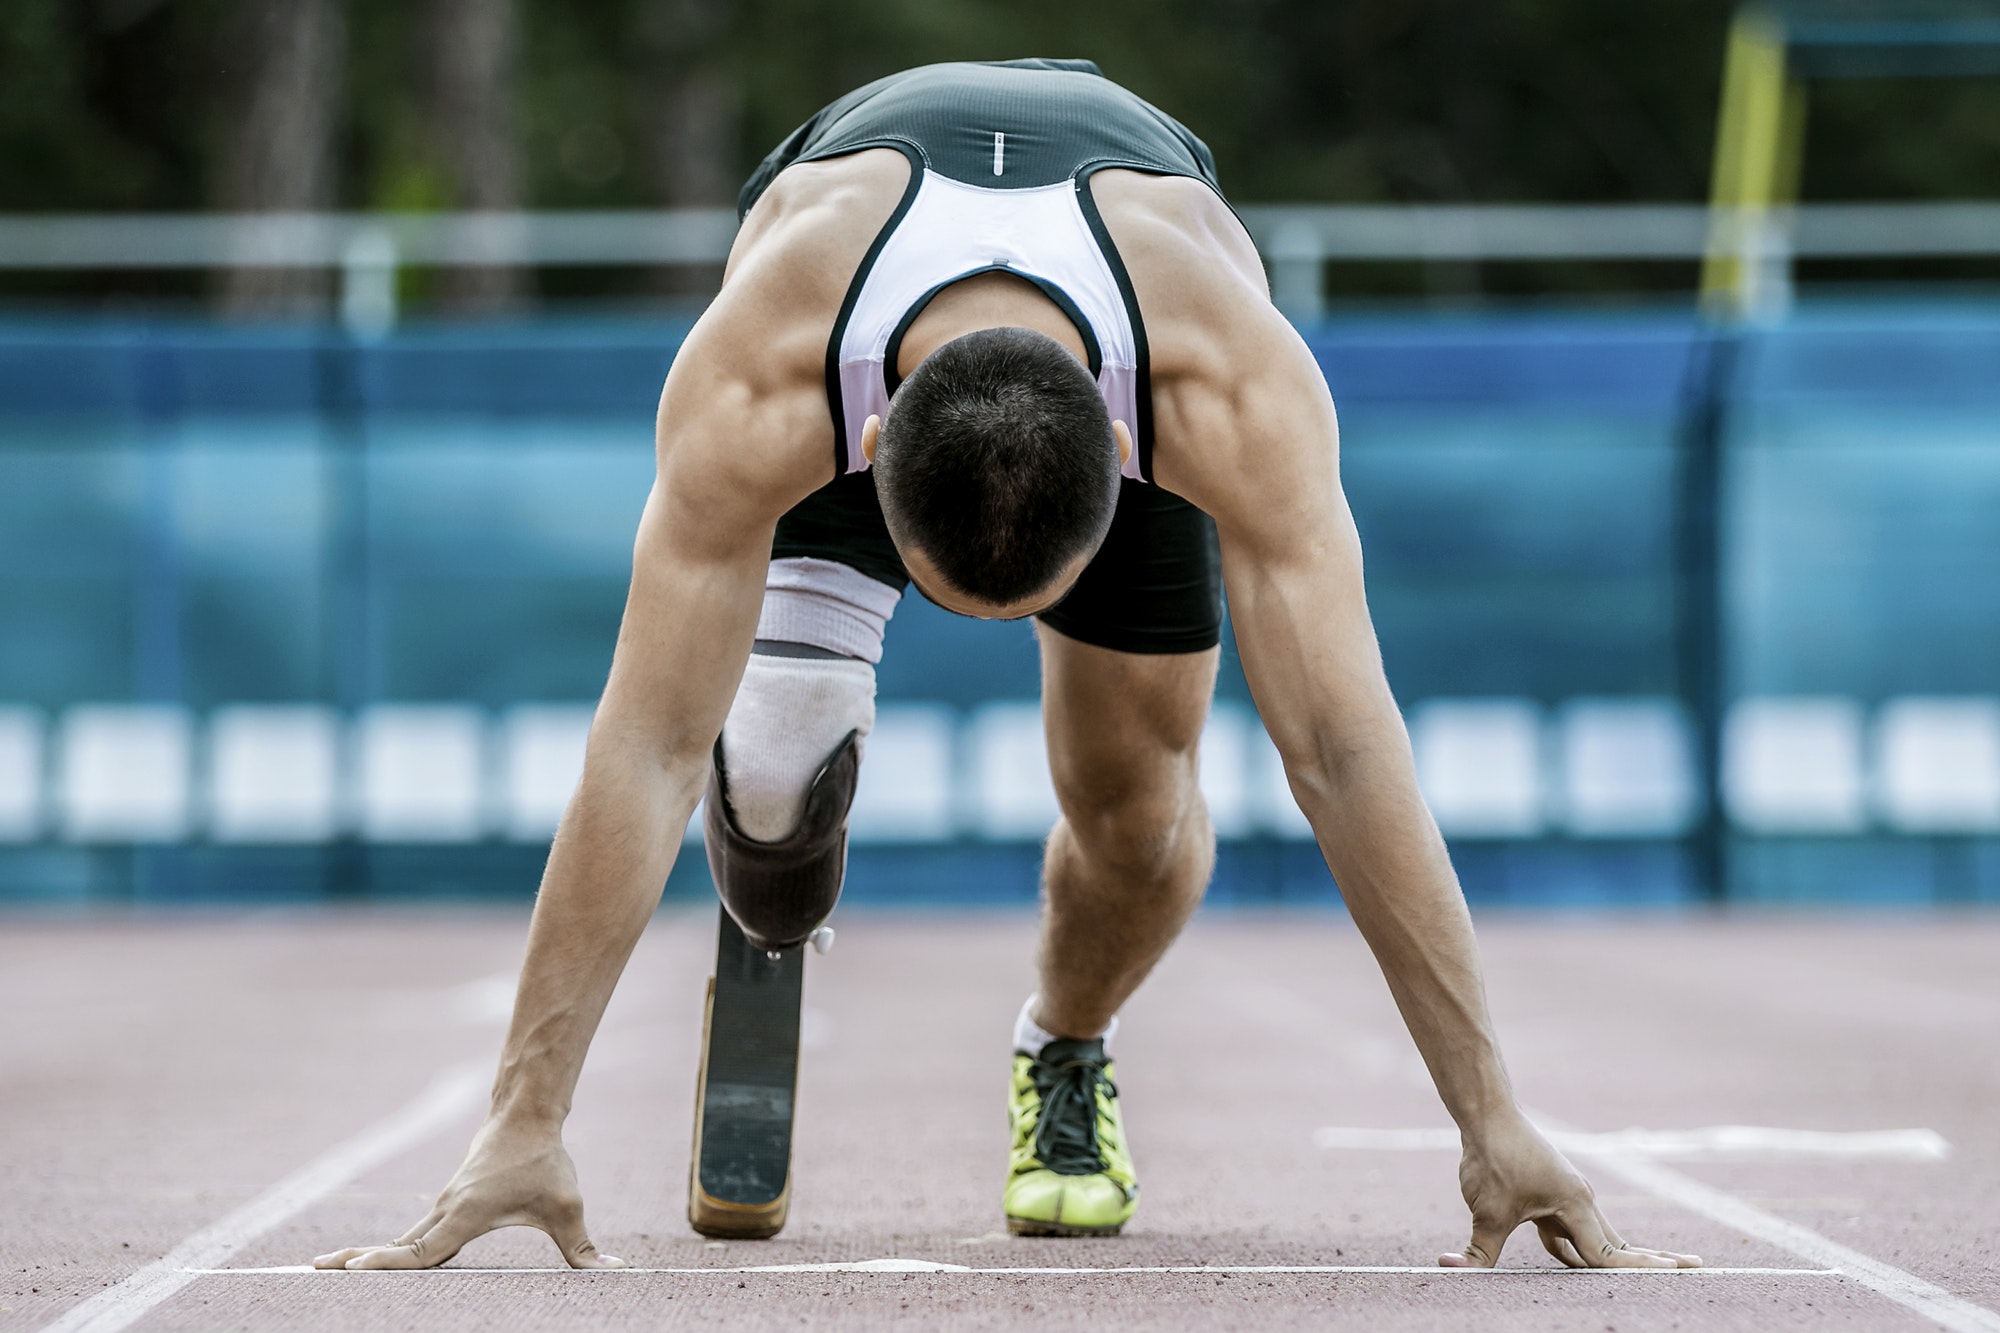 disabled athlete preparing to start running